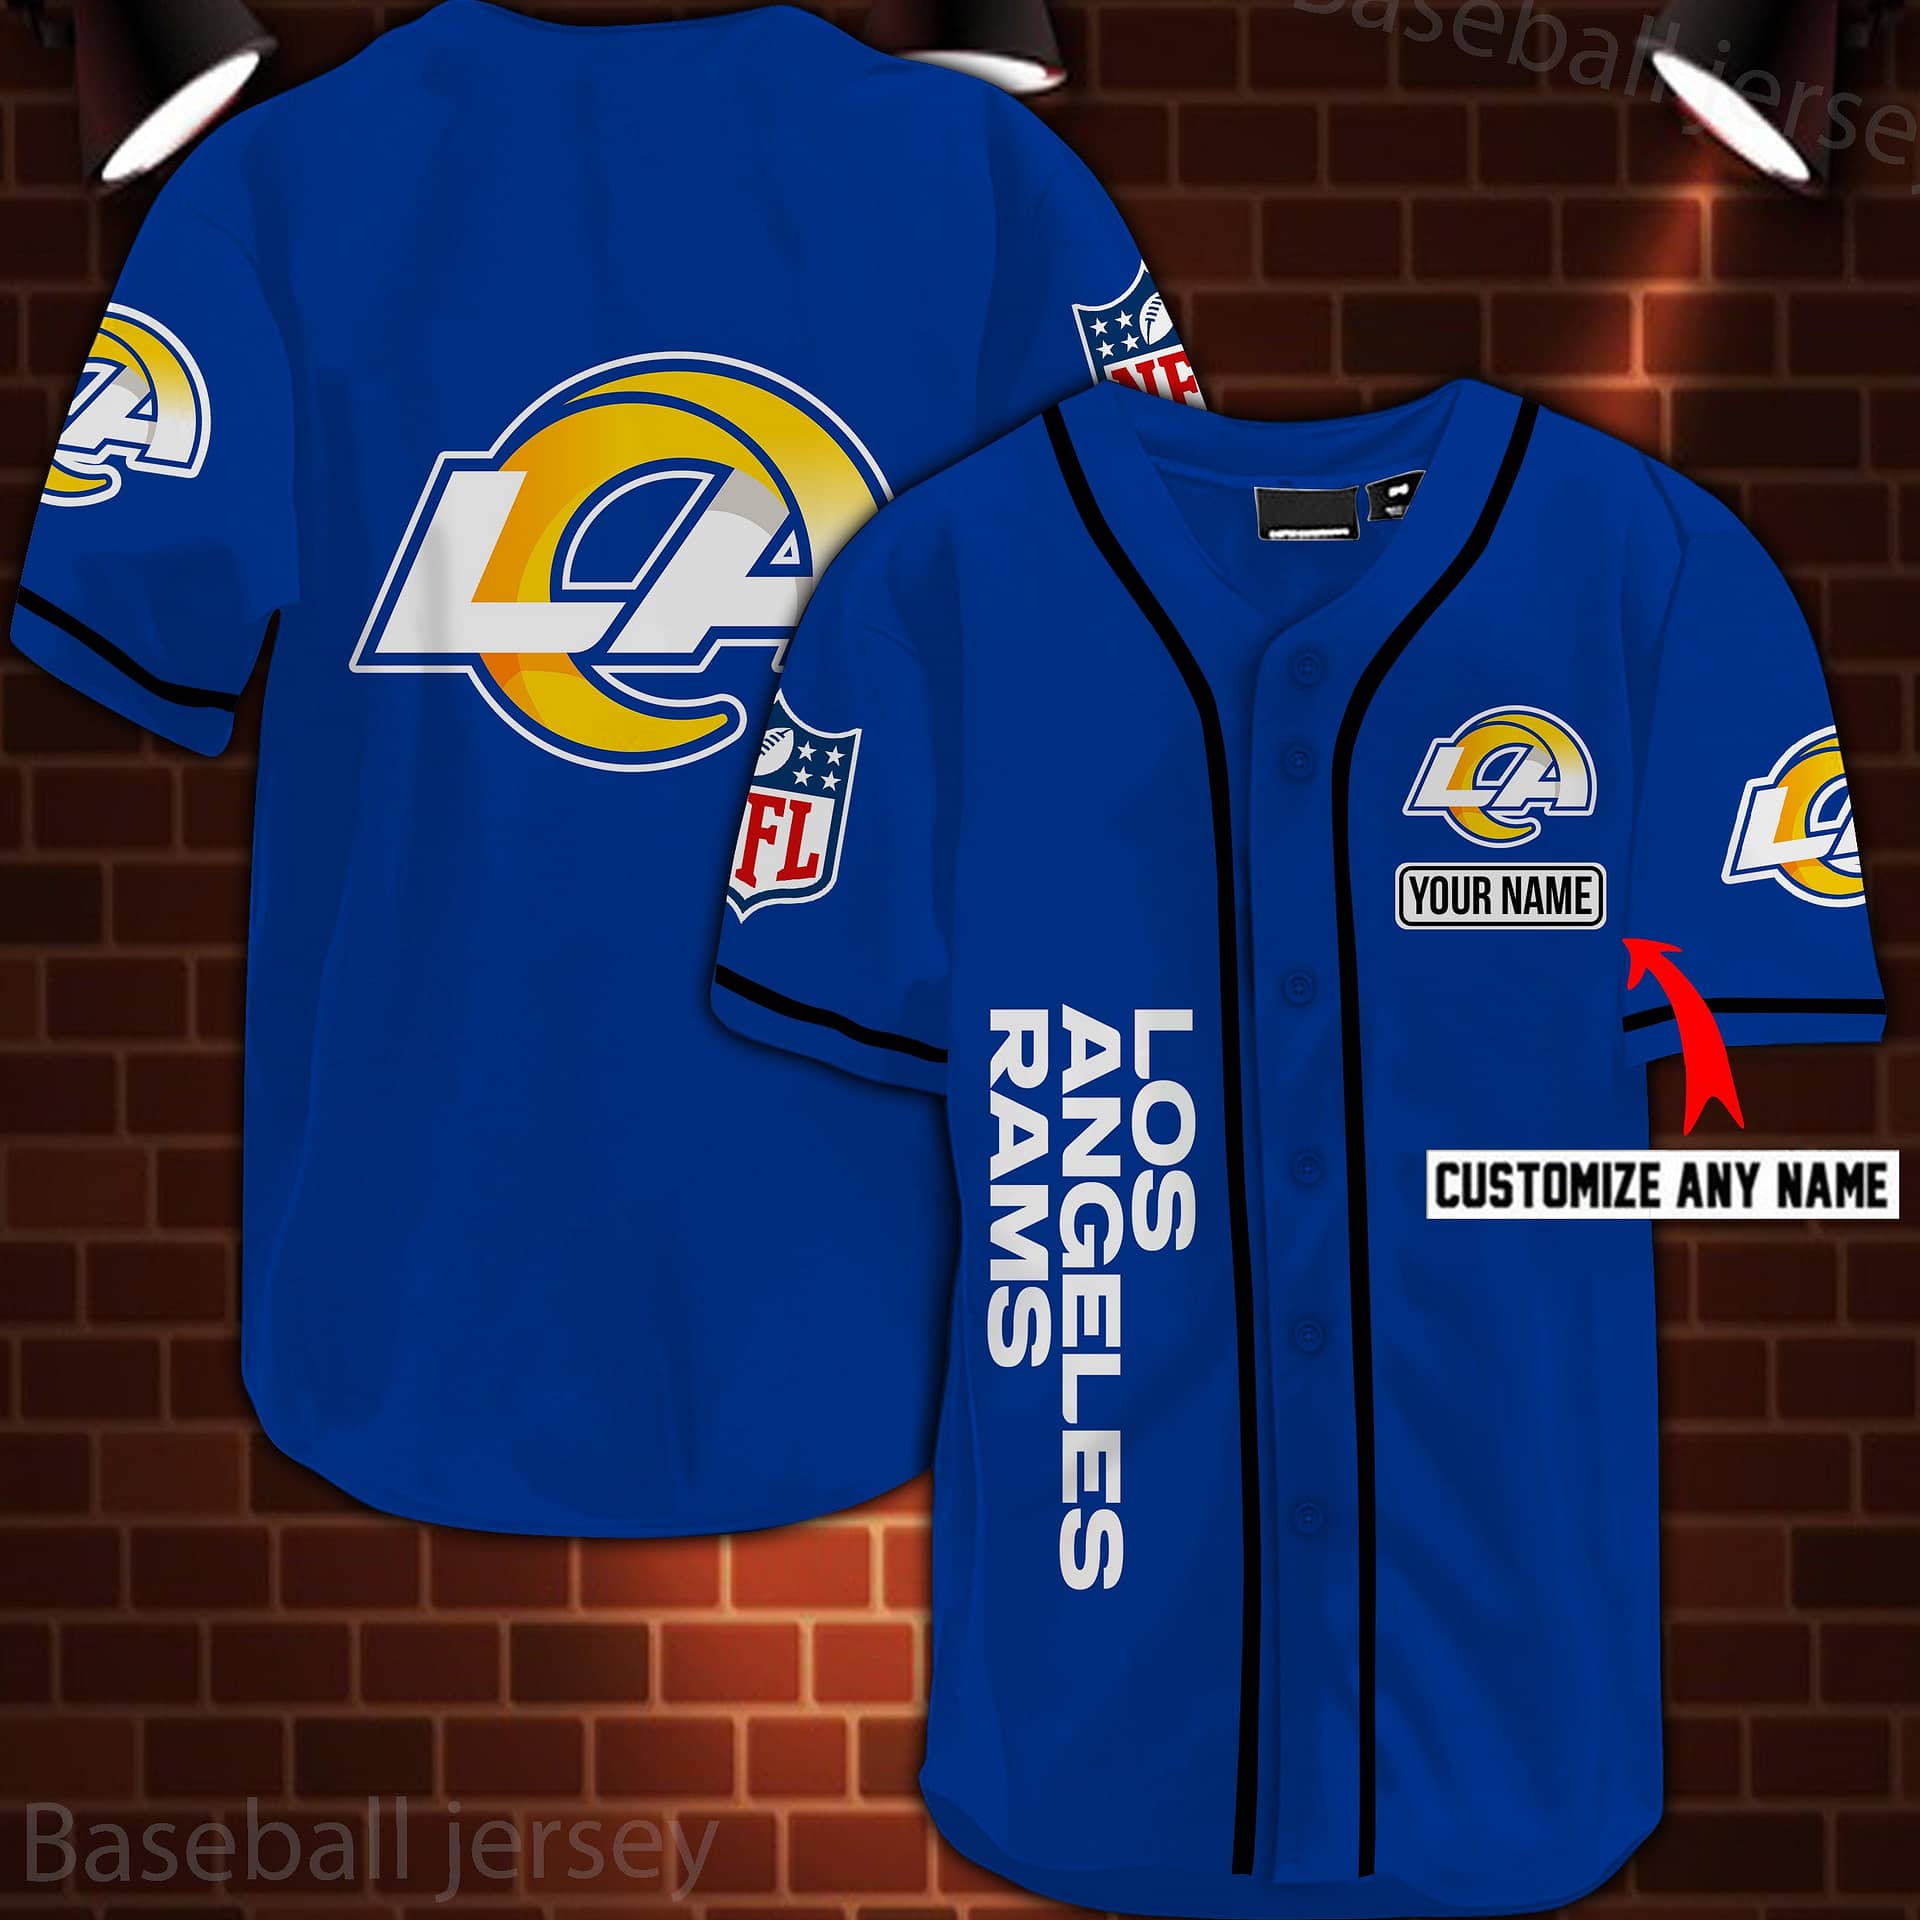 Los Angeles Rams Nfl 3D Digital Printed Personalized Baseball Jersey